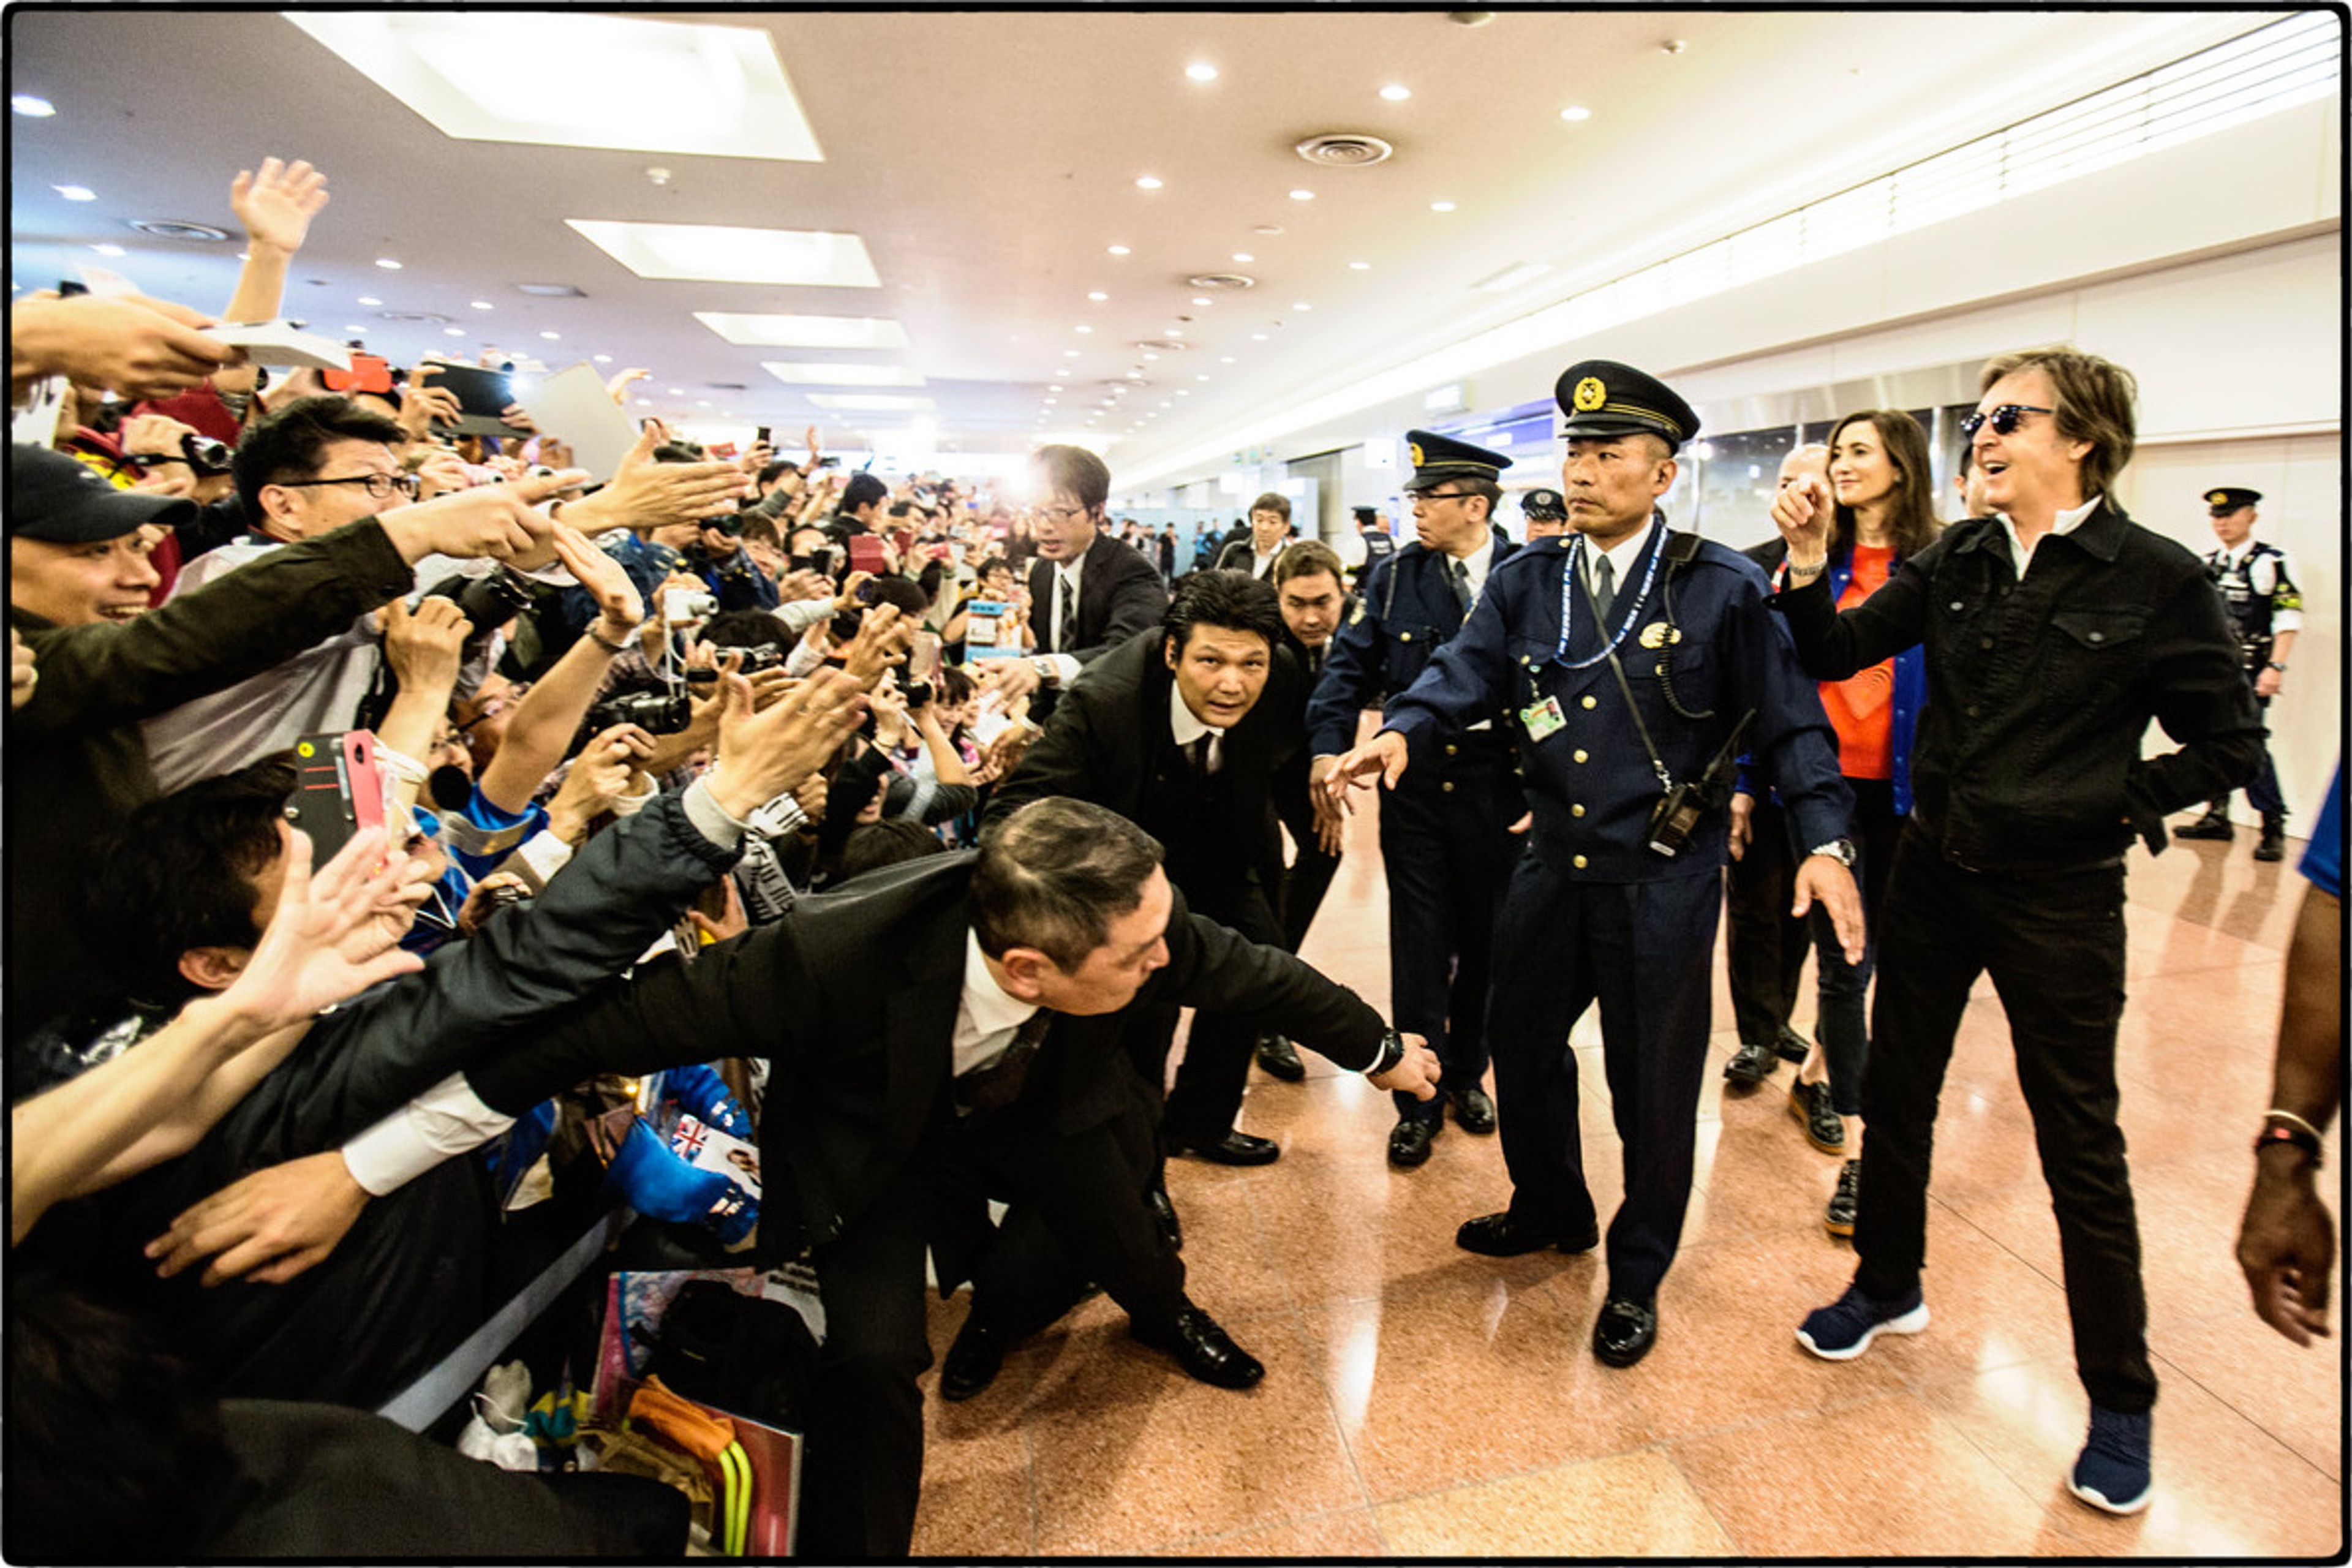 Paul greets fans at Tokyo International Airport, 23rd April 2017